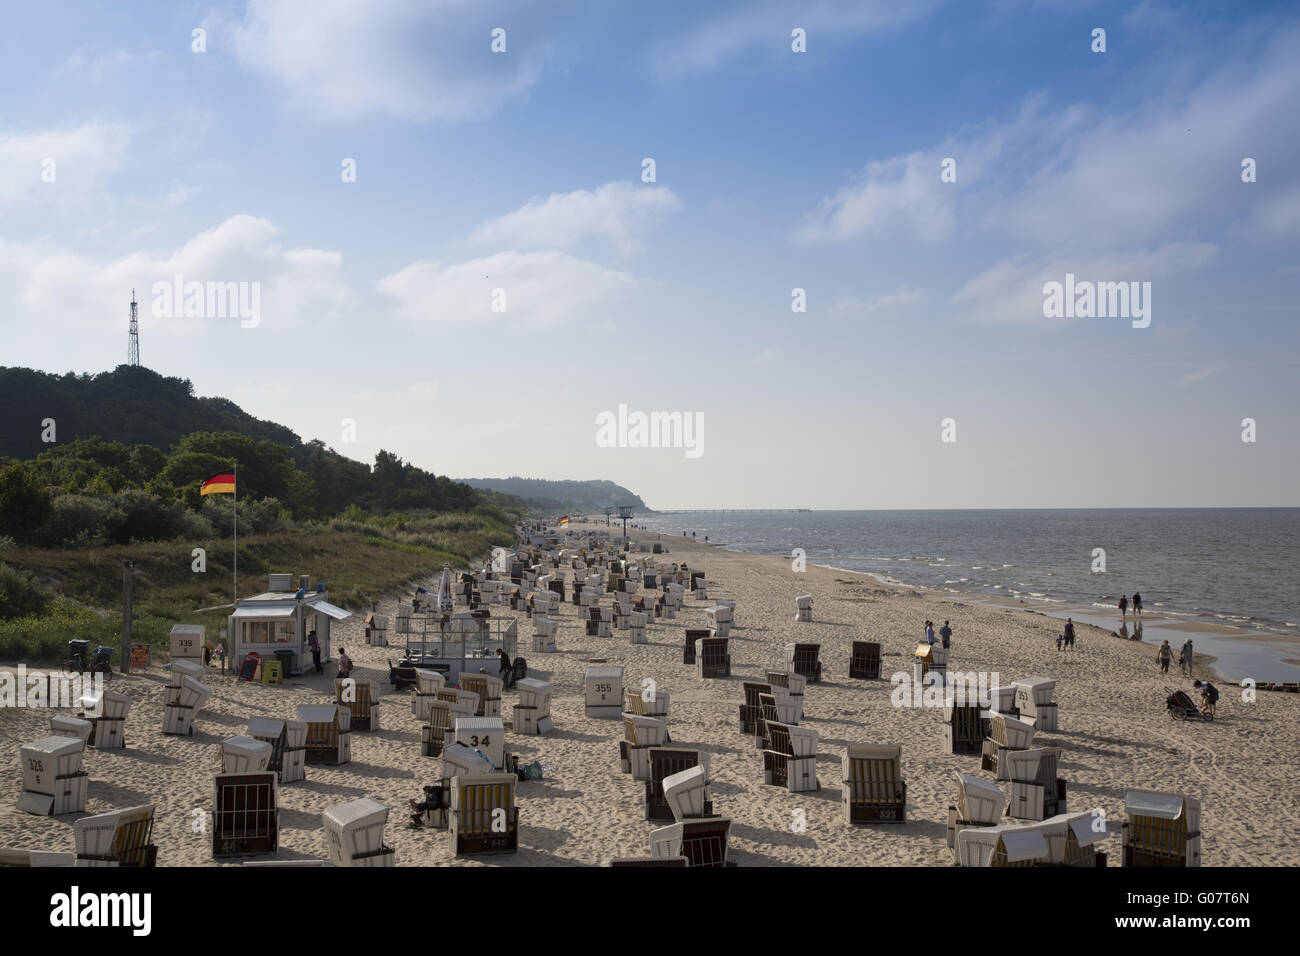 Heringsdorf Beach, Usedom, Germany Stock Photo